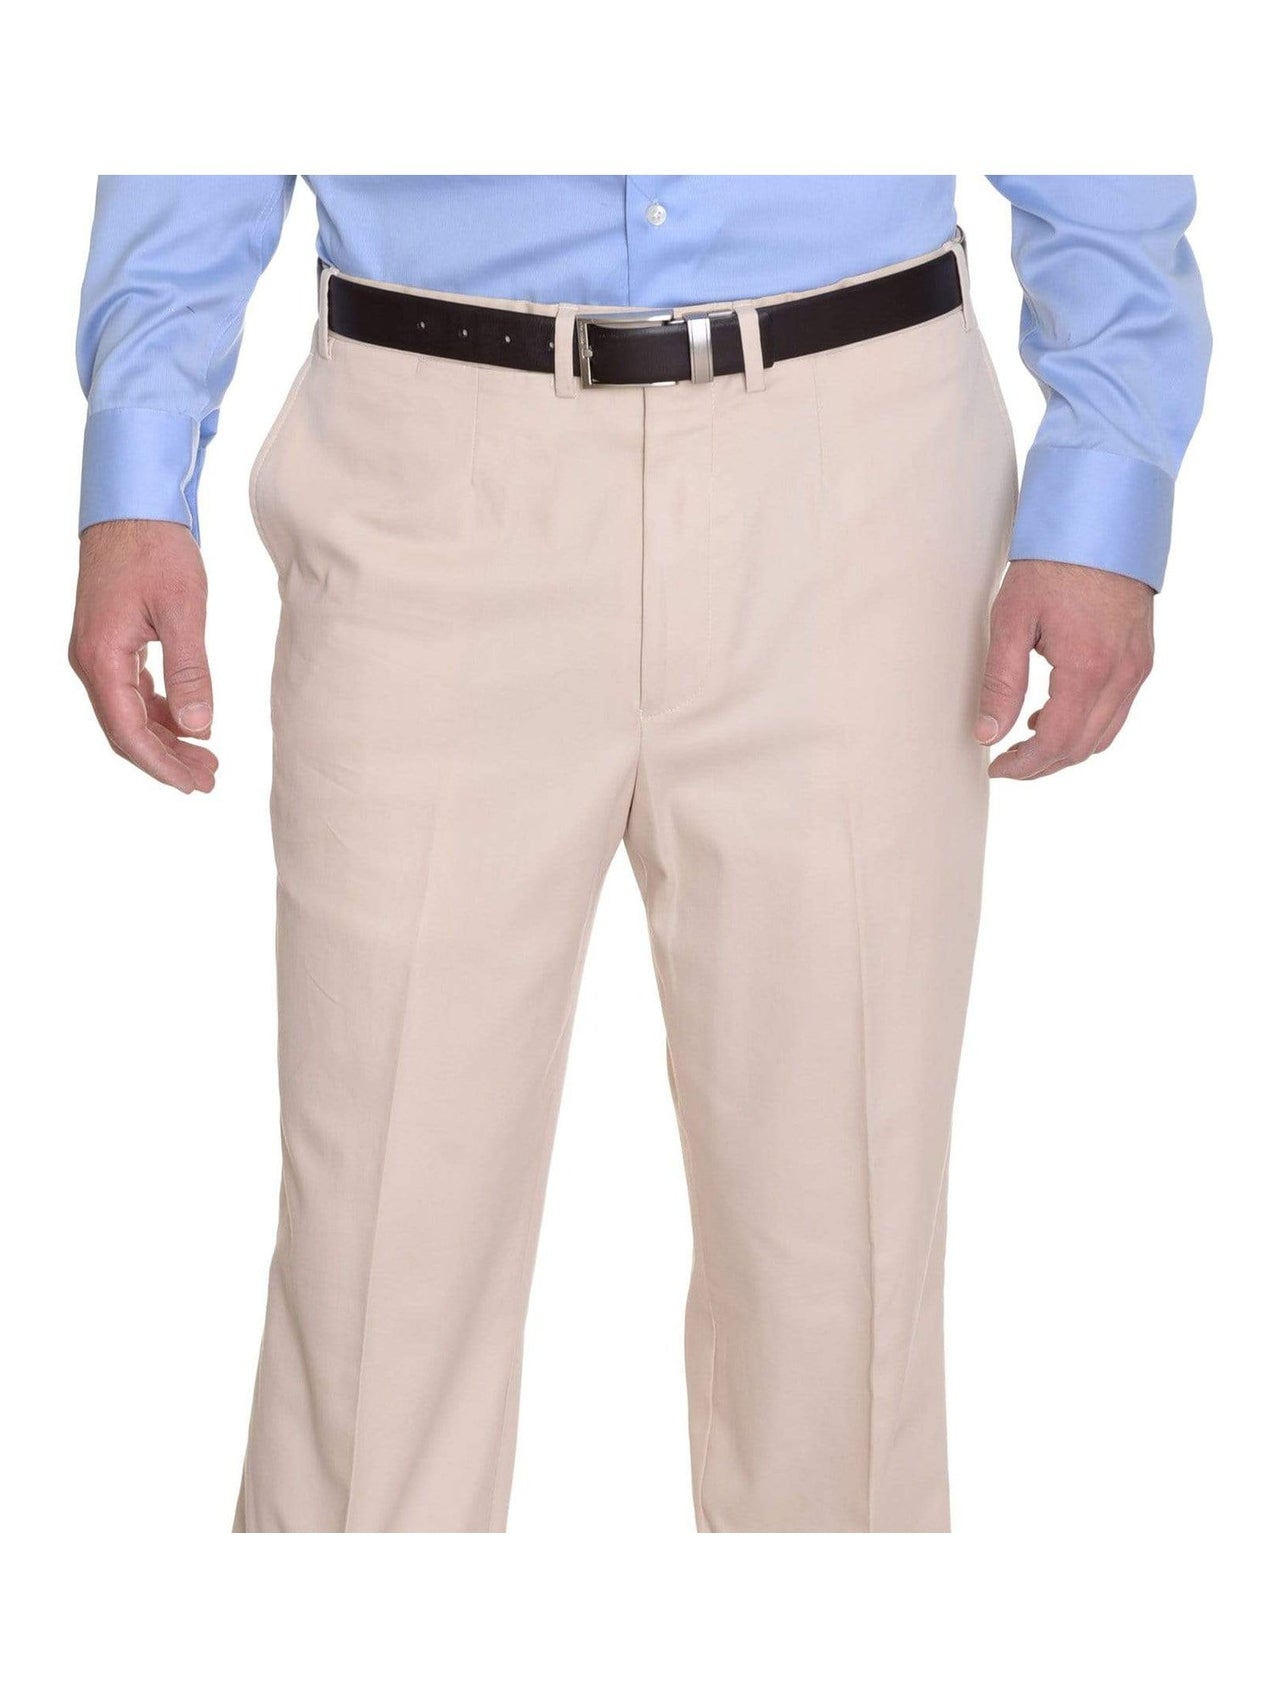 Crespi PANTS 34W Crespi Classic Fit Solid Light Beige Khaki Flat Front Cotton Casual Pants